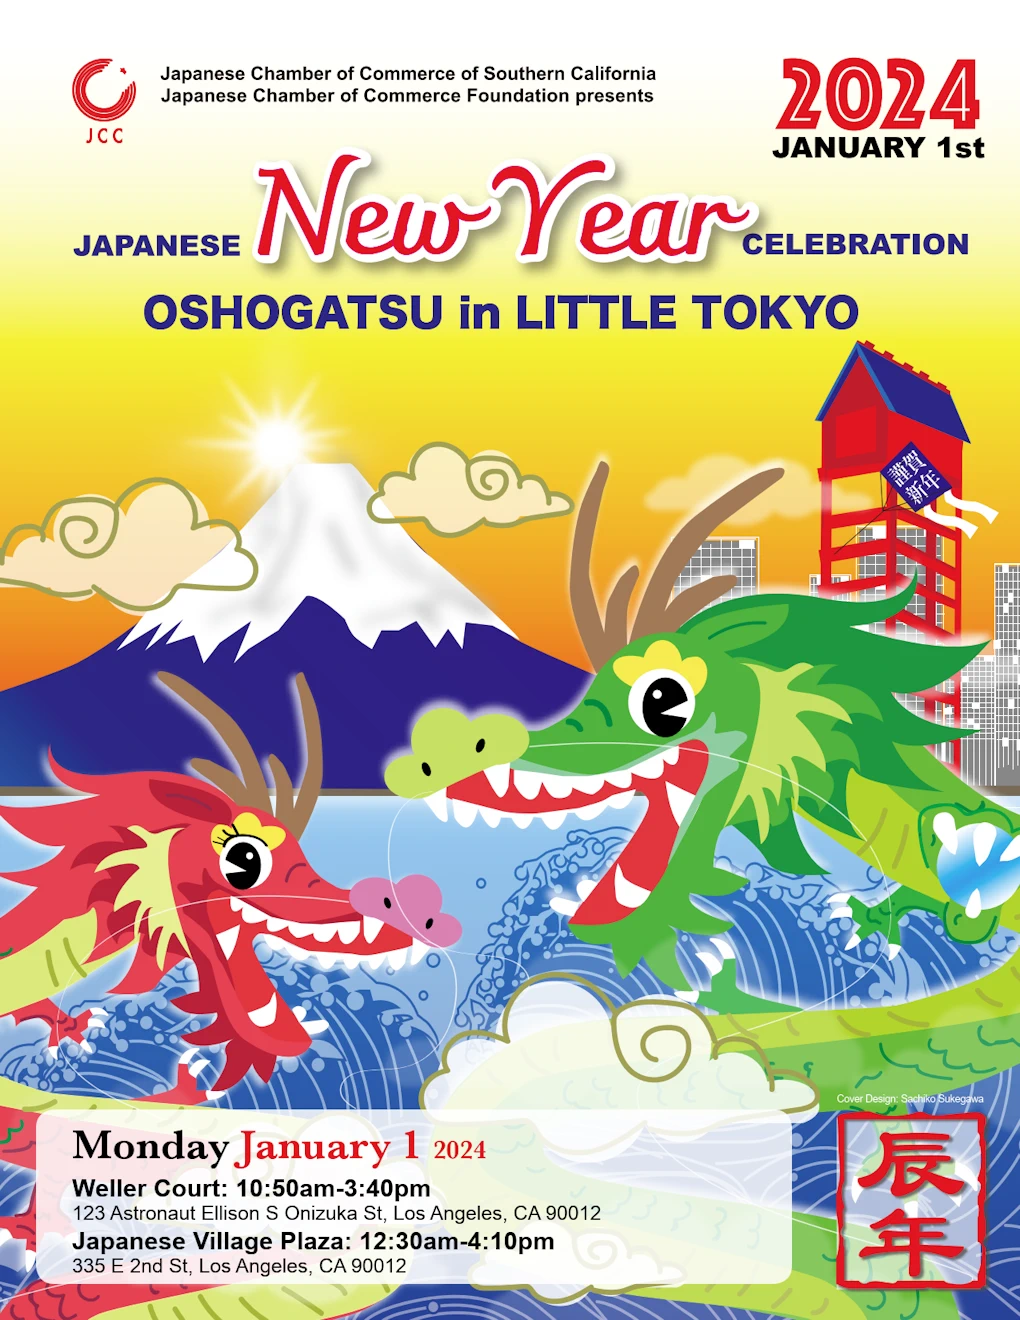 2023 - 24th Annual Japanese New Year's Oshogatsu Festival Event - Little Tokyo (2 Locations, 2 Days: Dec 31st & Jan 1st) Entertainment